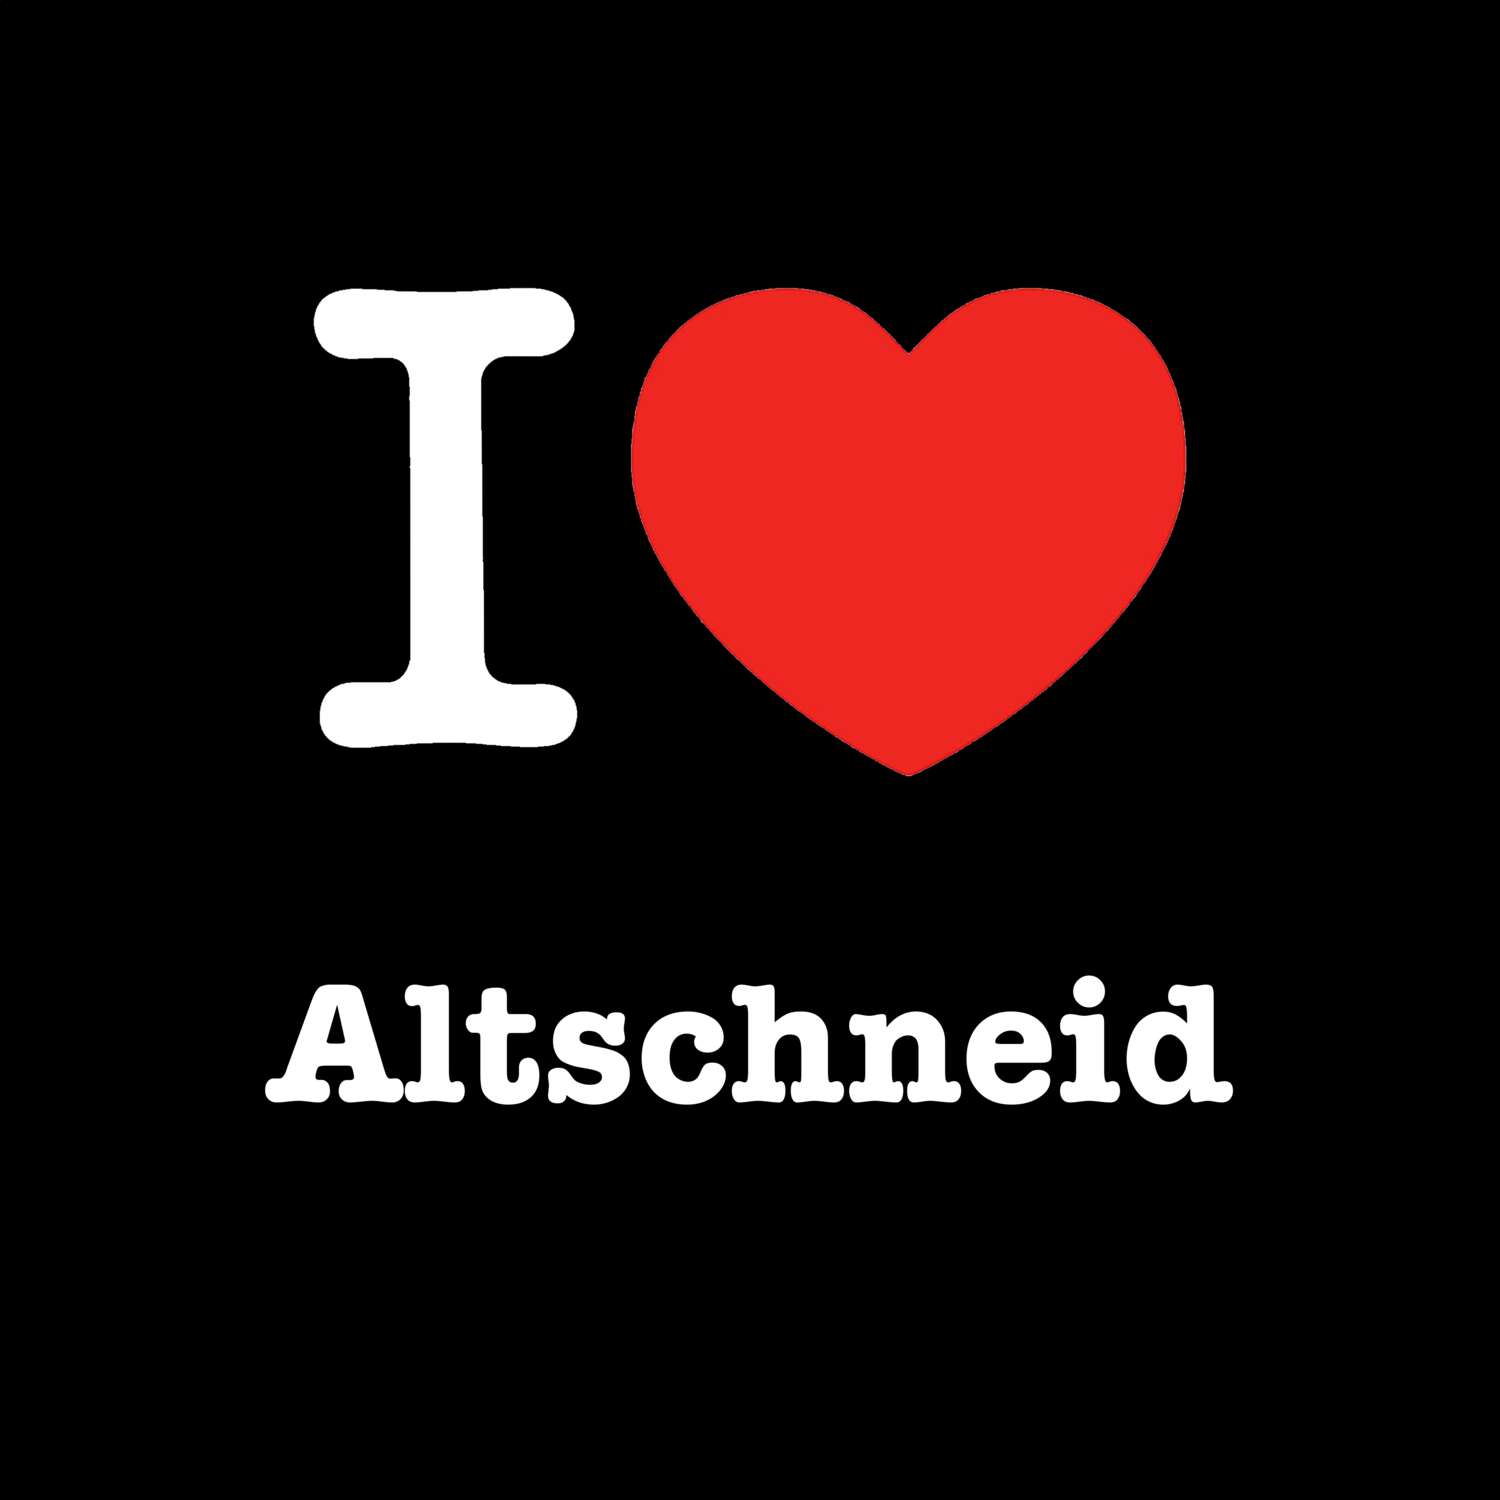 Altschneid T-Shirt »I love«